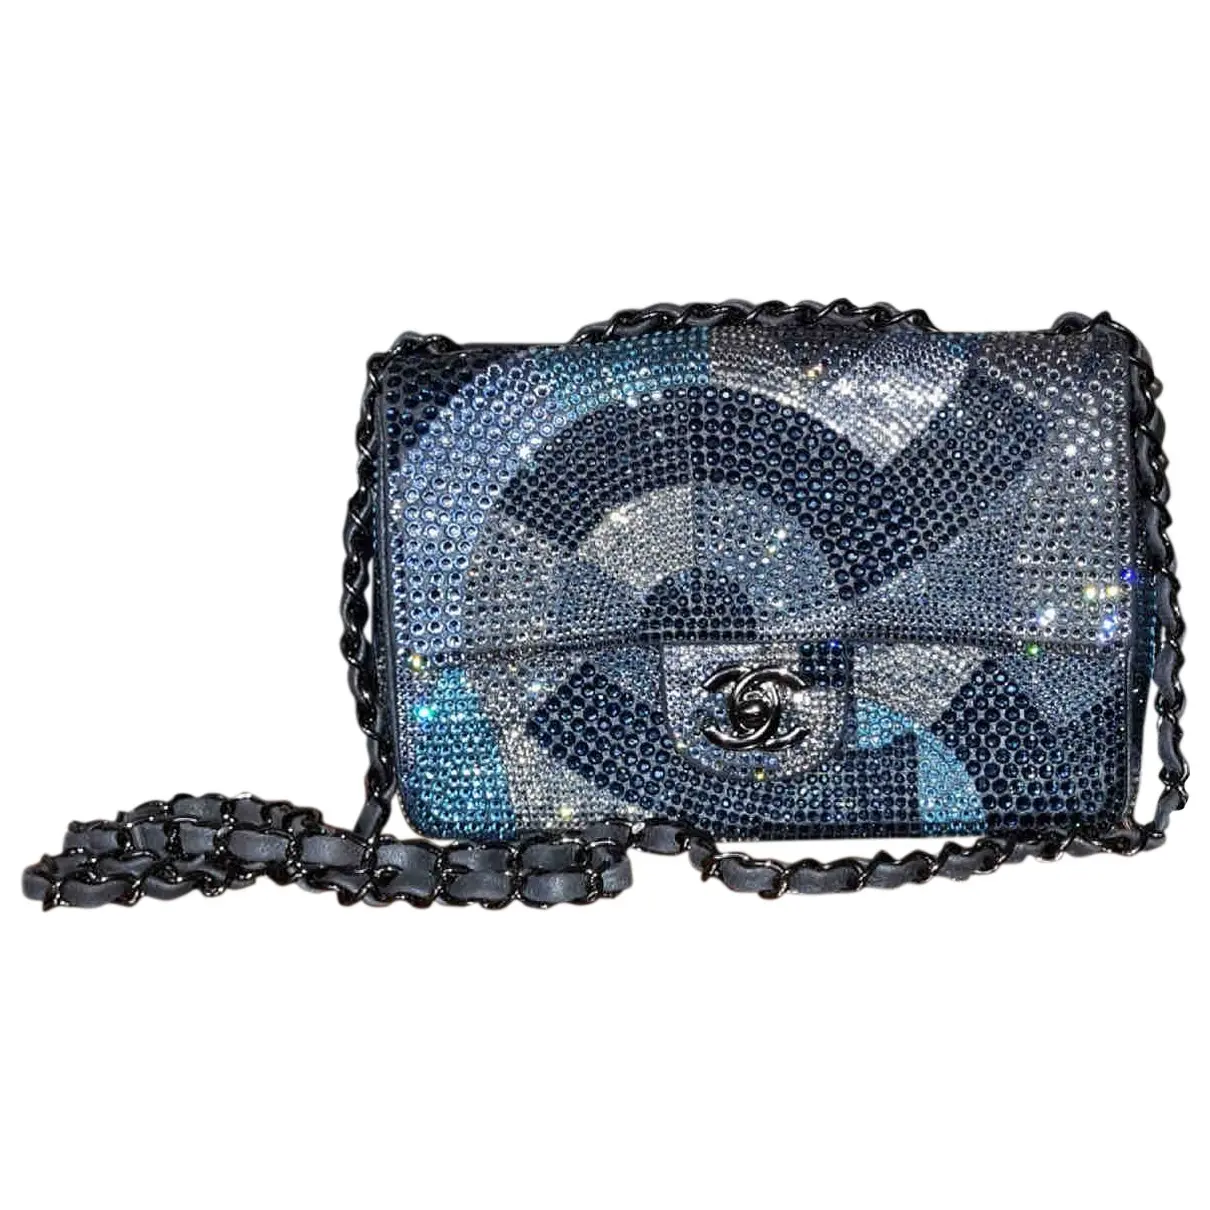 Timeless/Classique glitter handbag Chanel